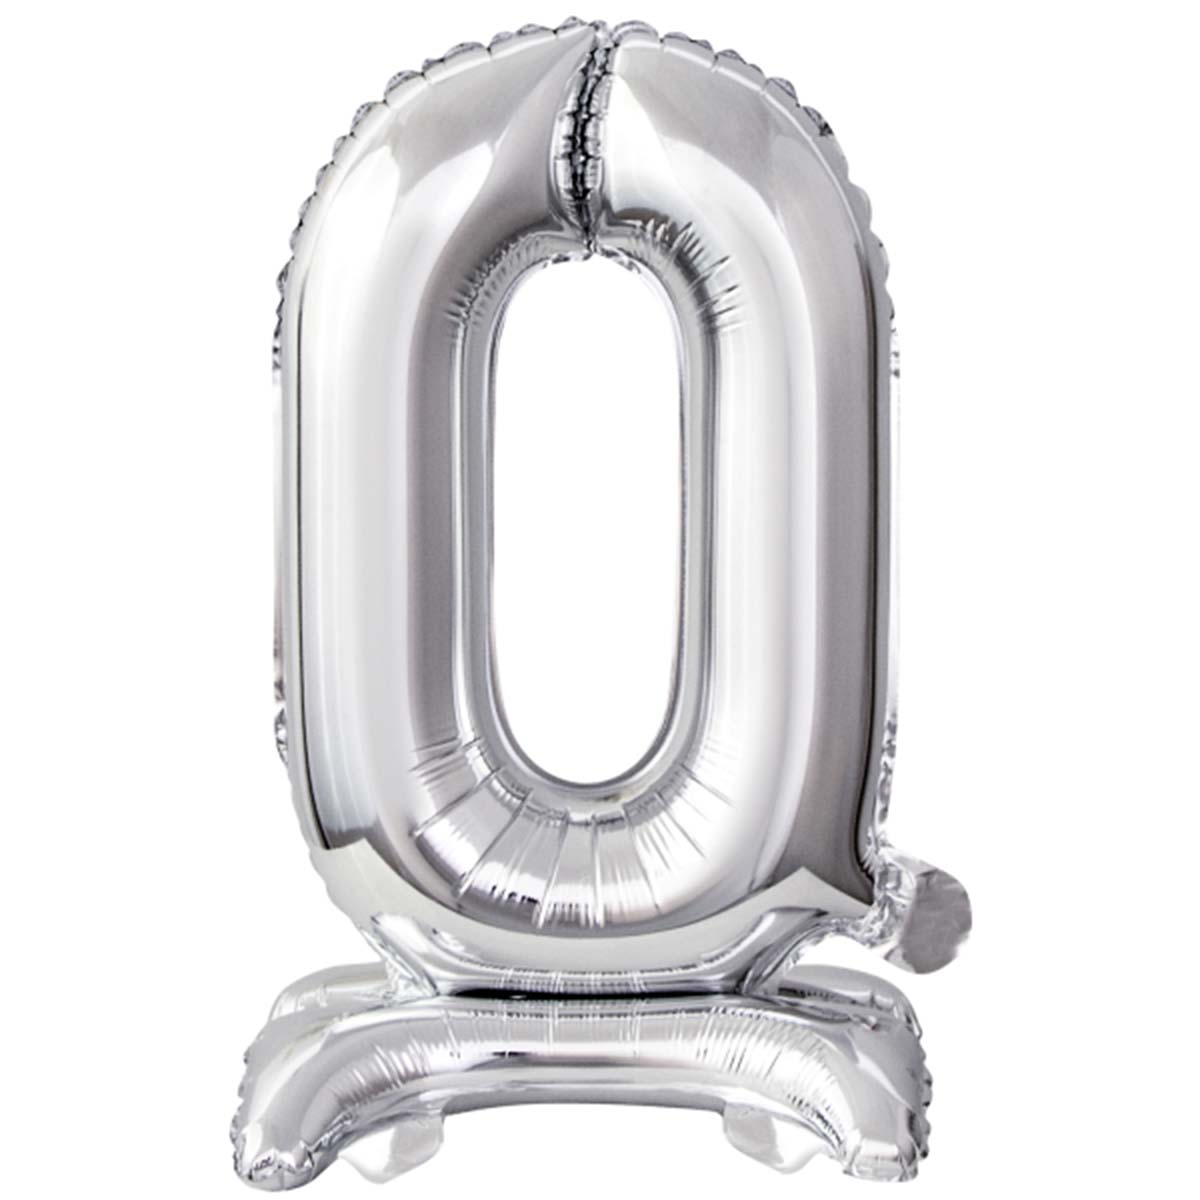 Folieballong siffra 0 silver stående 38 cm